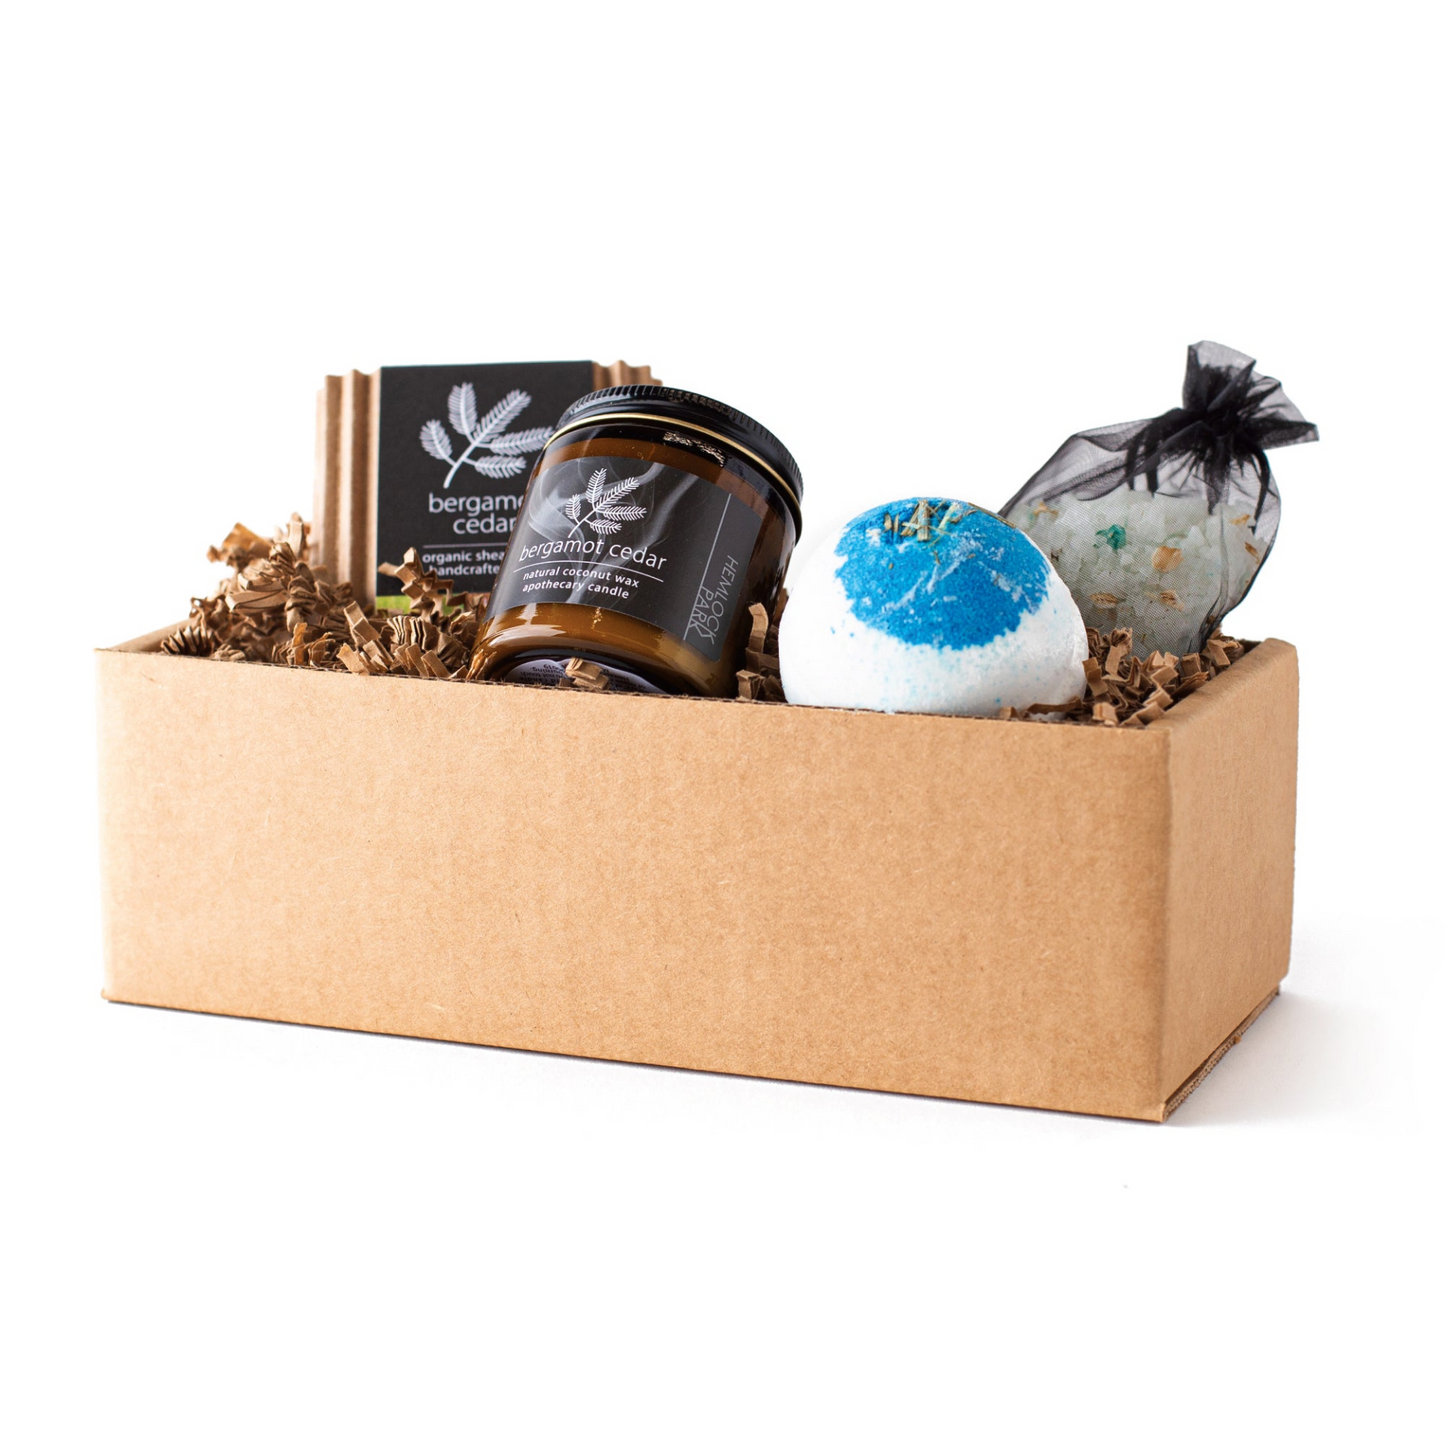 Bergamot Cedar | Artisanal Spa Collection Gift Set - USA Medical Supply